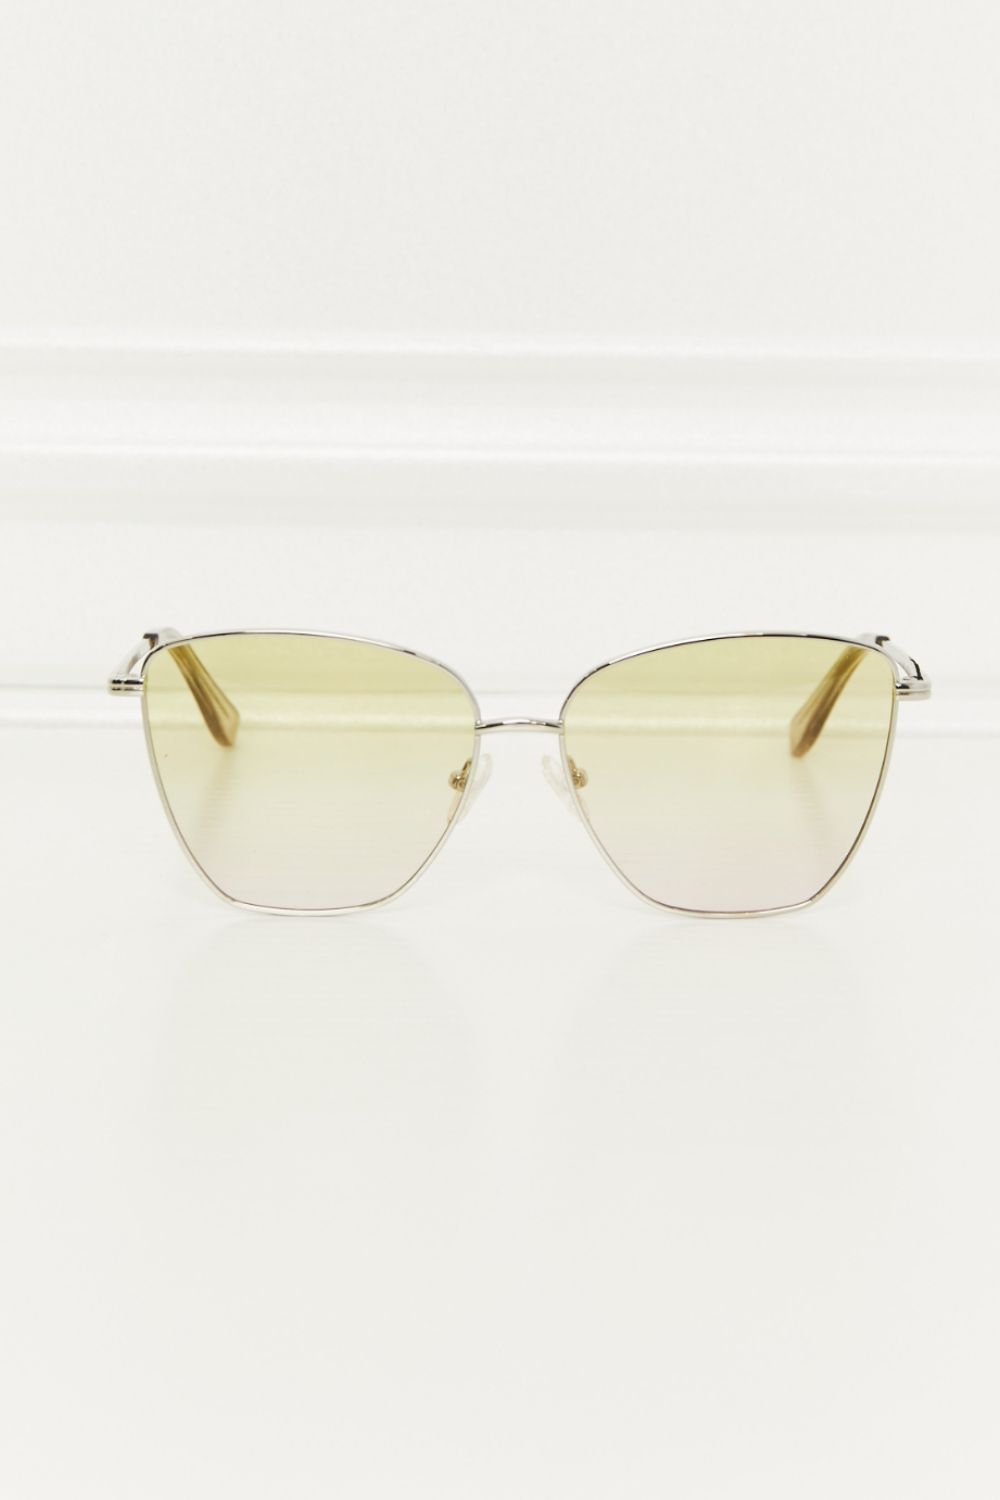 Traci K Collection Metal Frame Full Rim Sunglasses